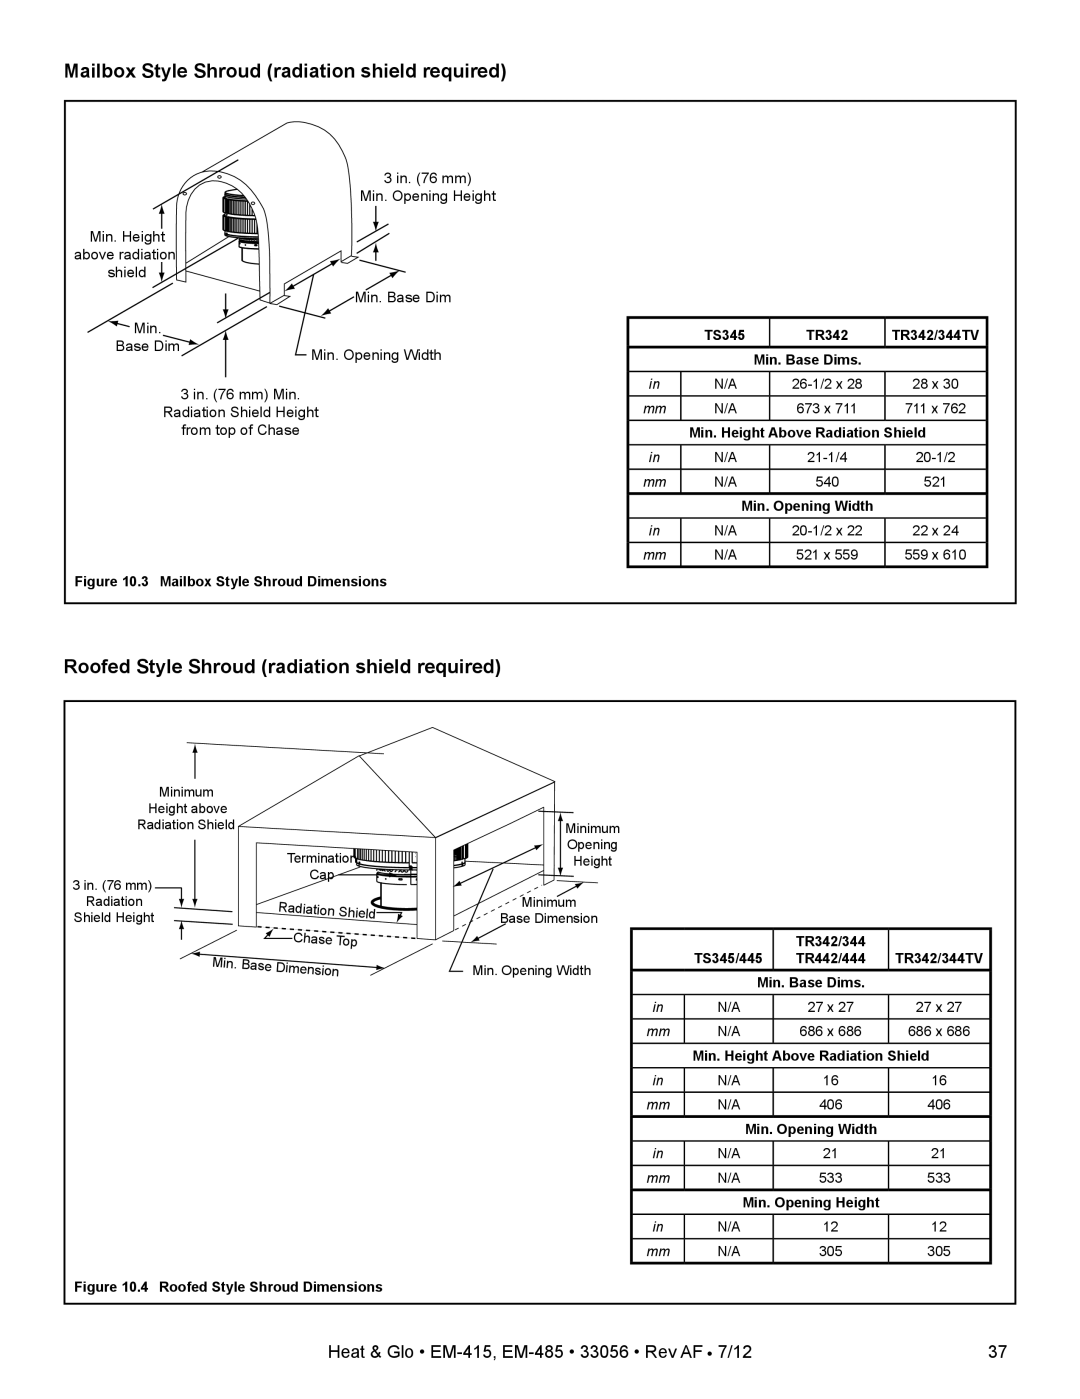 Heat & Glo LifeStyle EM-485T - 42, EM-415 - 36 owner manual Mailbox Style Shroud radiation shield required 